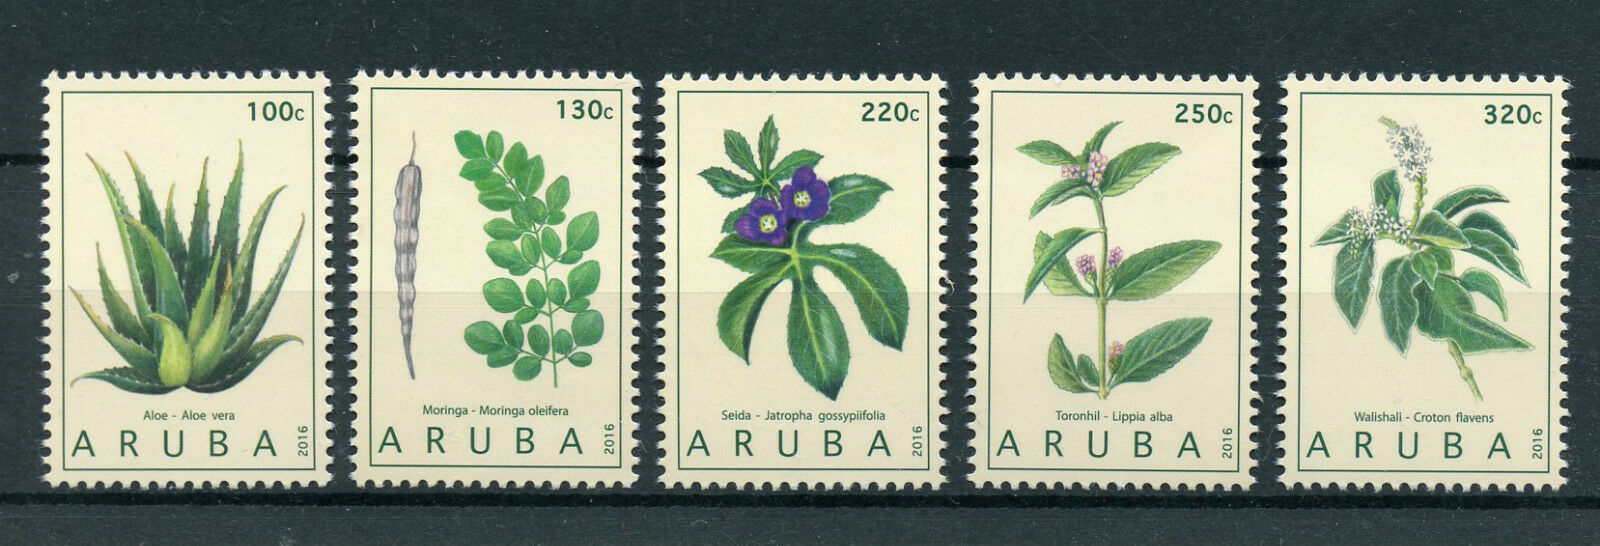 Aruba Stamps 2016 MNH Medicinal Plants Aloe Vera Moringa Seida Toronhill 5v Set